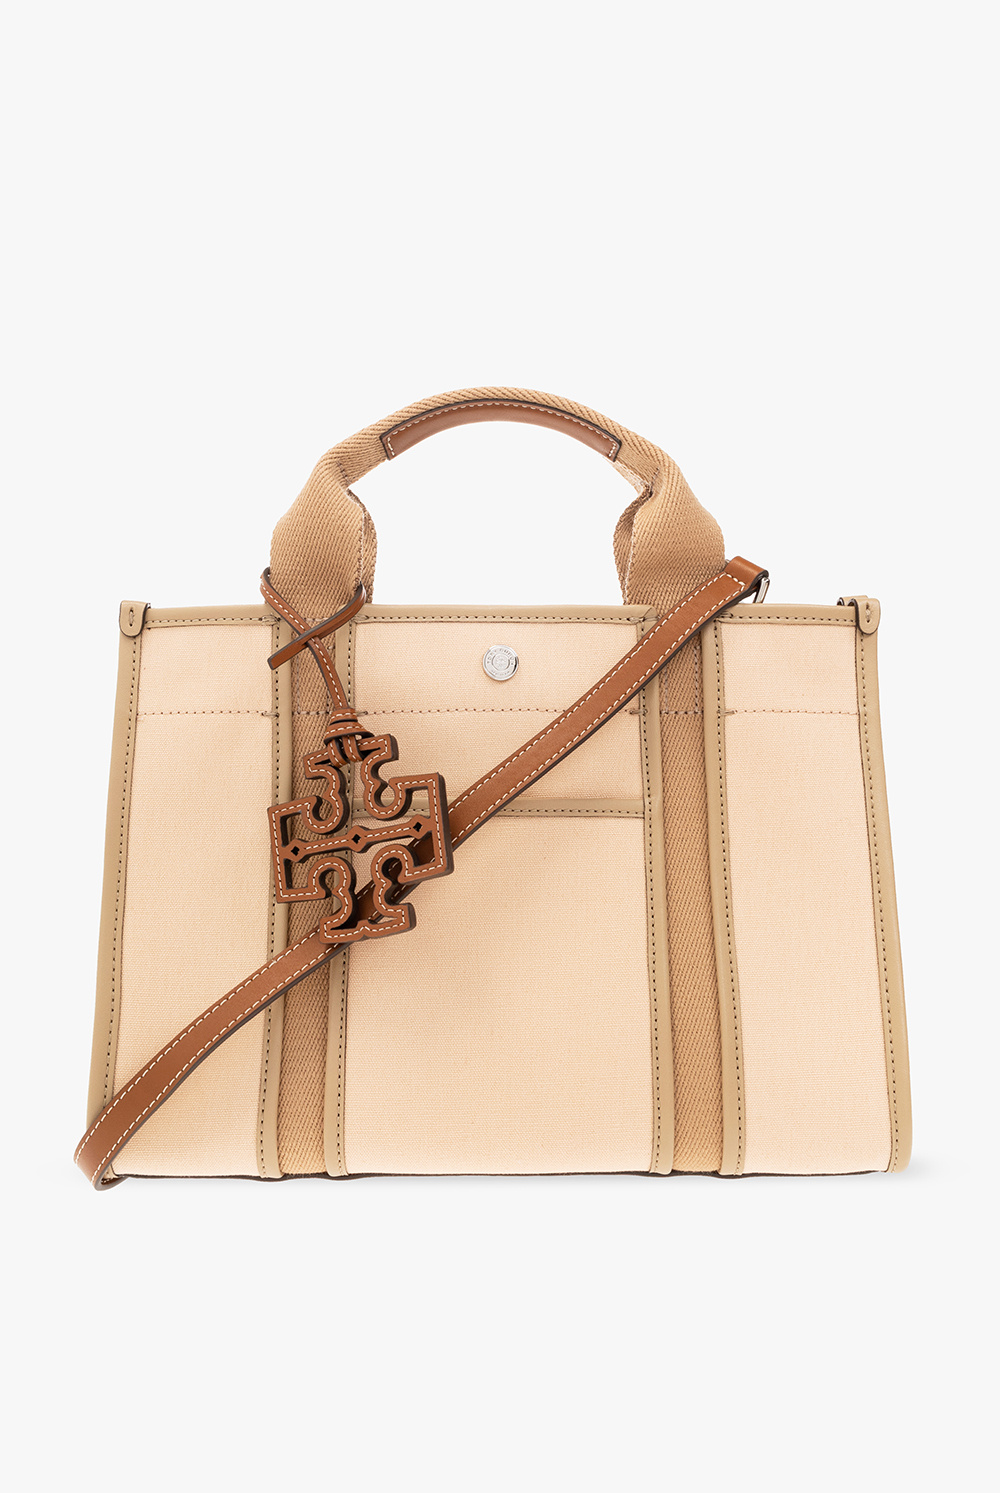 Tory Burch 'Twill Small' handbag | Women's Bags | Vitkac